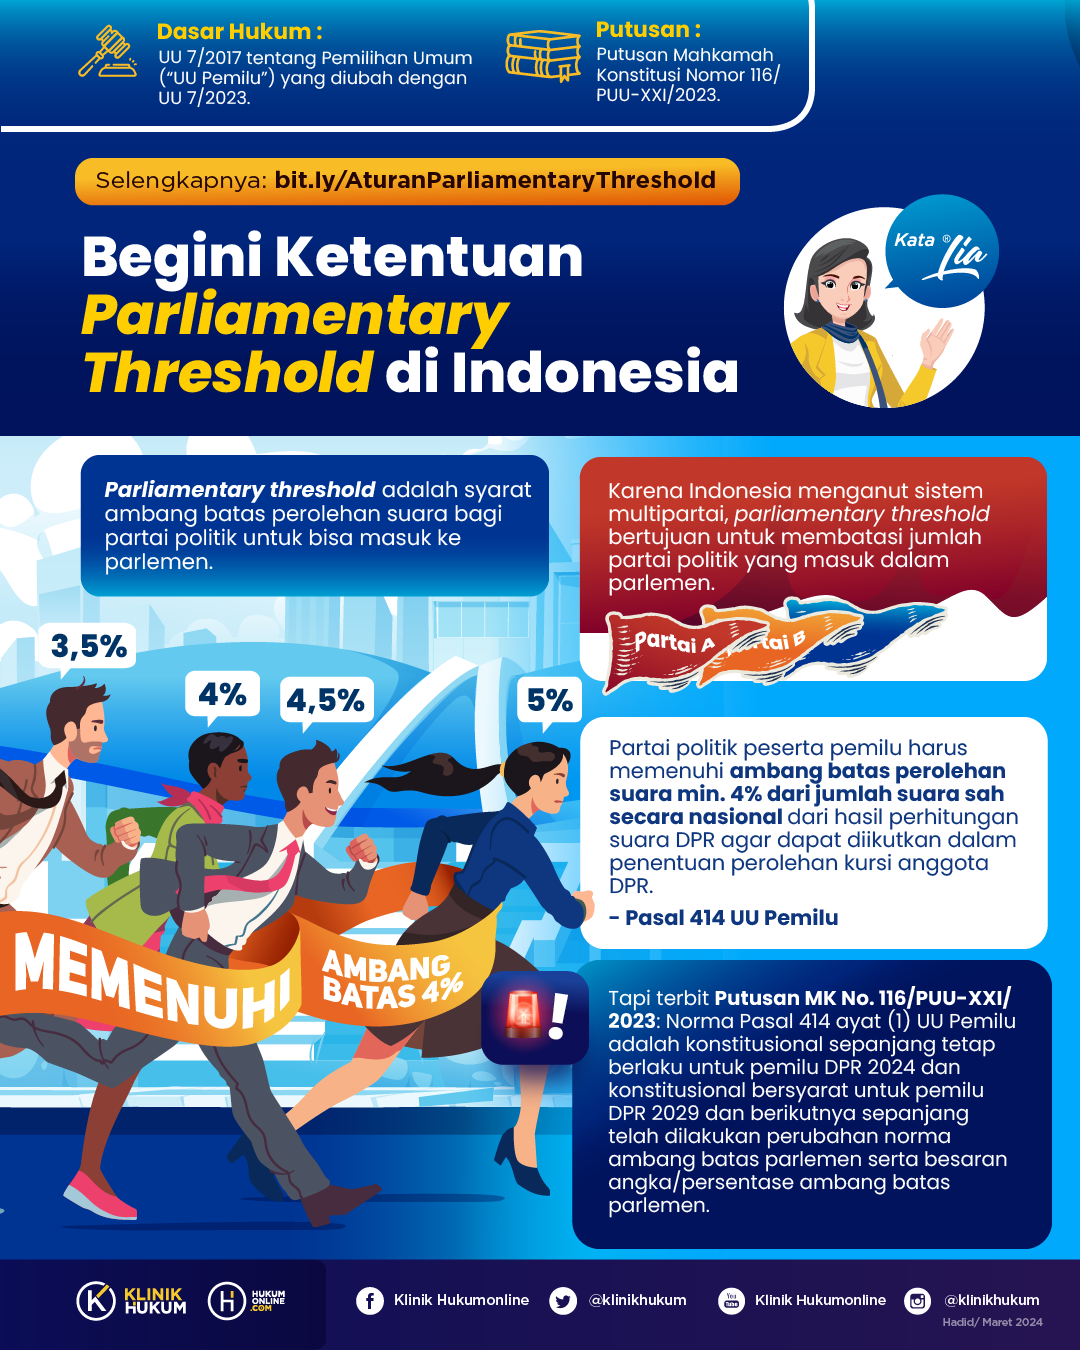 Begini Ketentuan Parliamentary Threshold di Indonesia